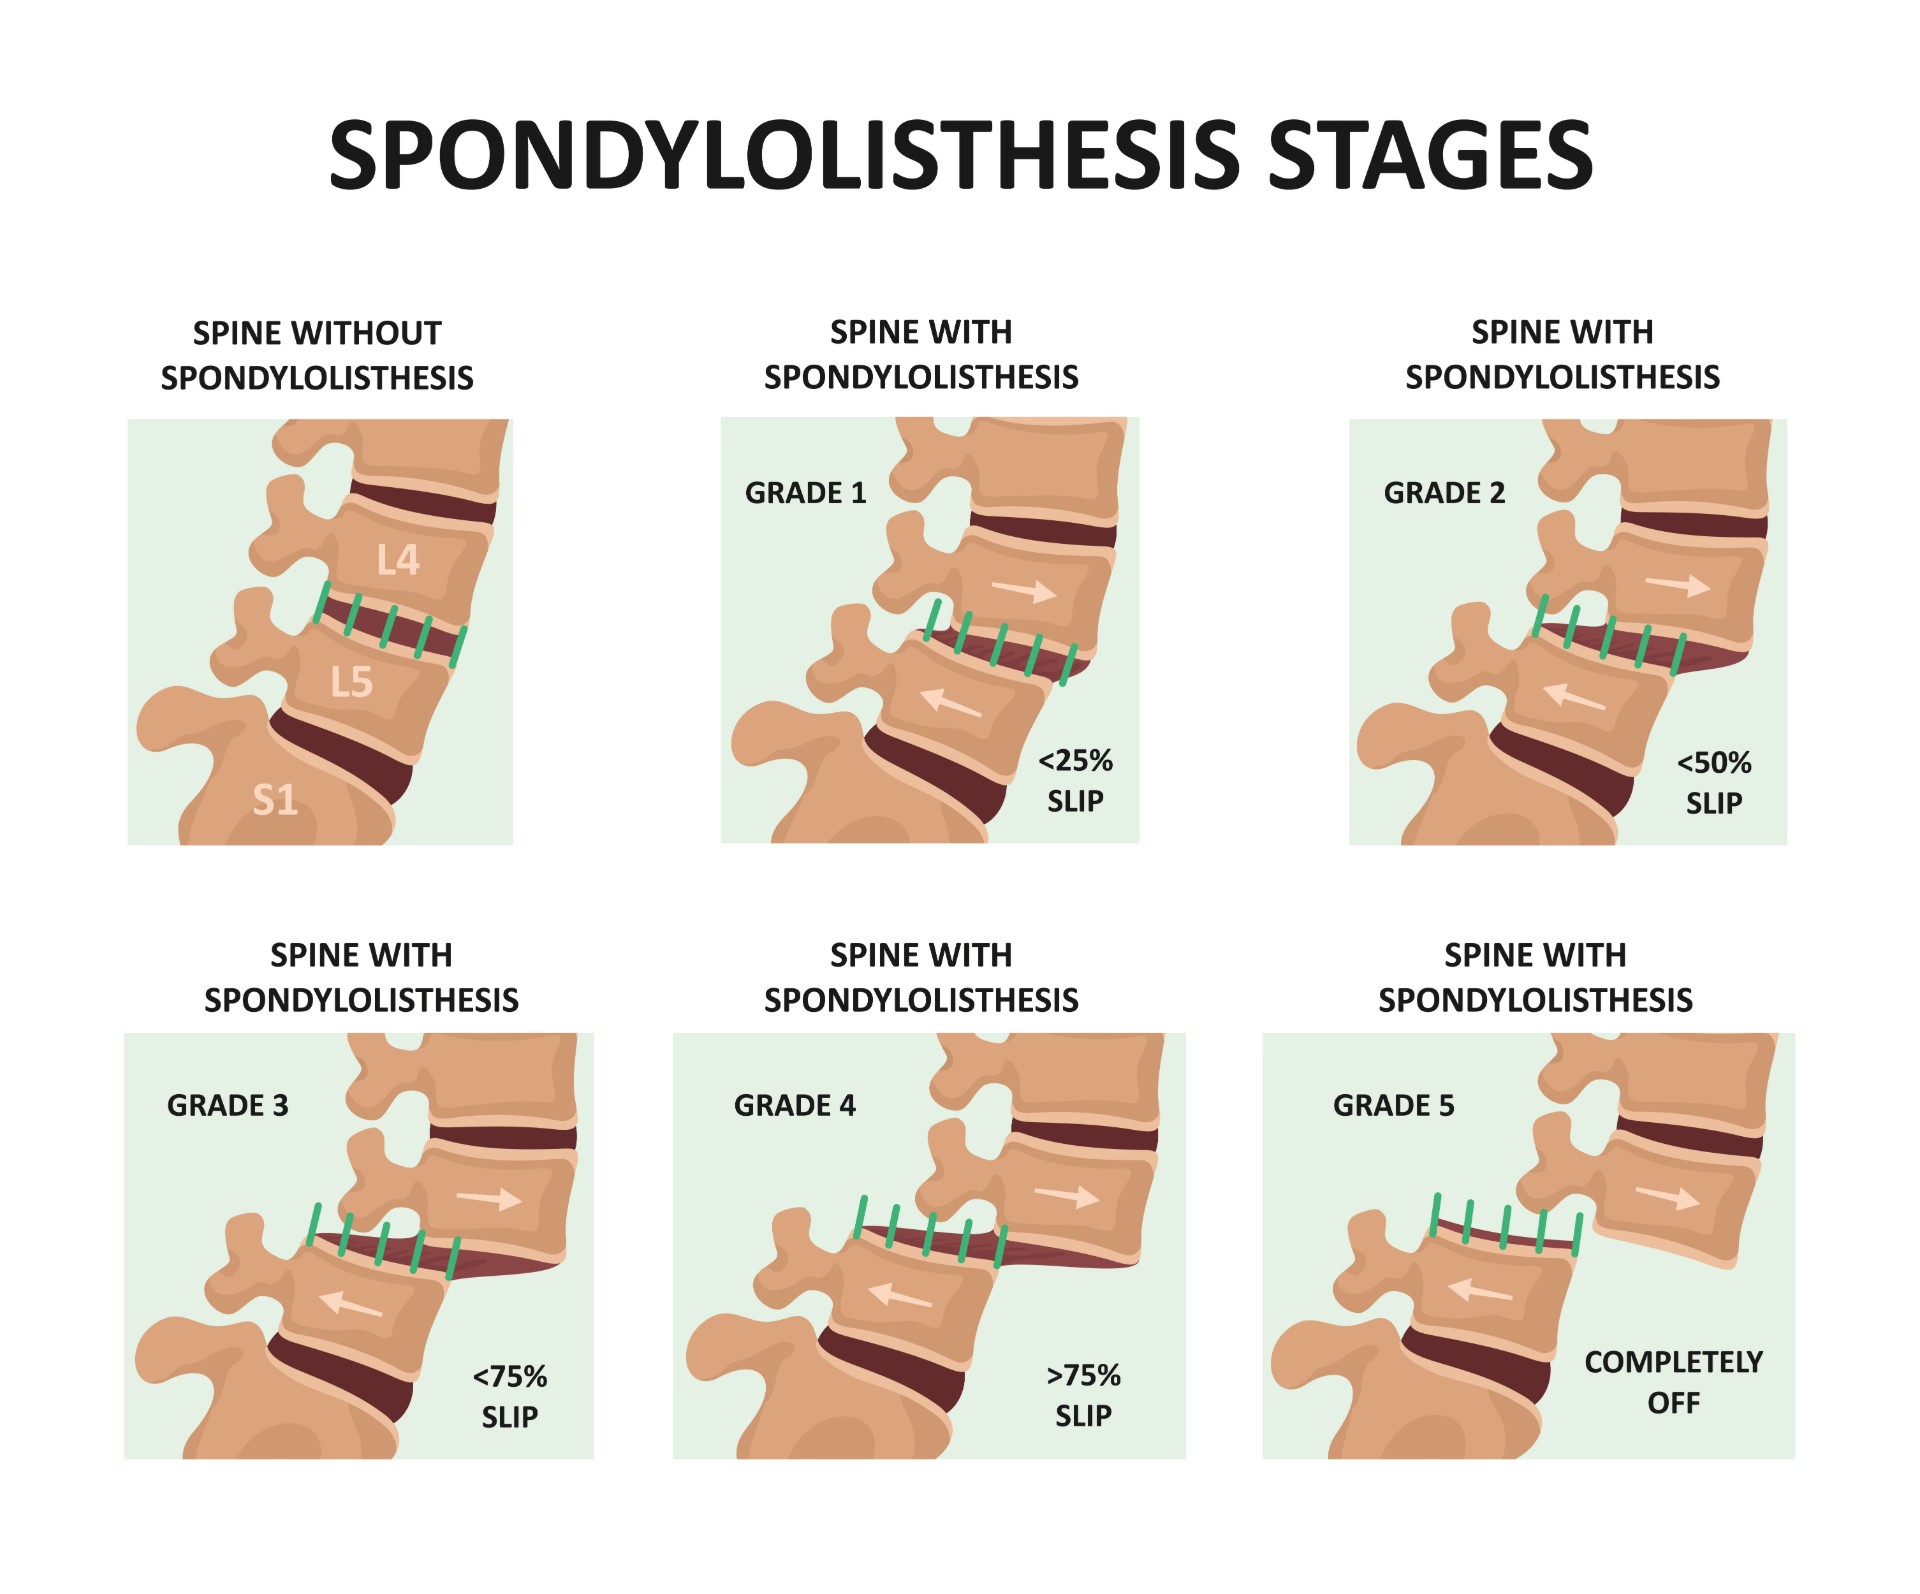 spondylolisthesis symptoms and signs